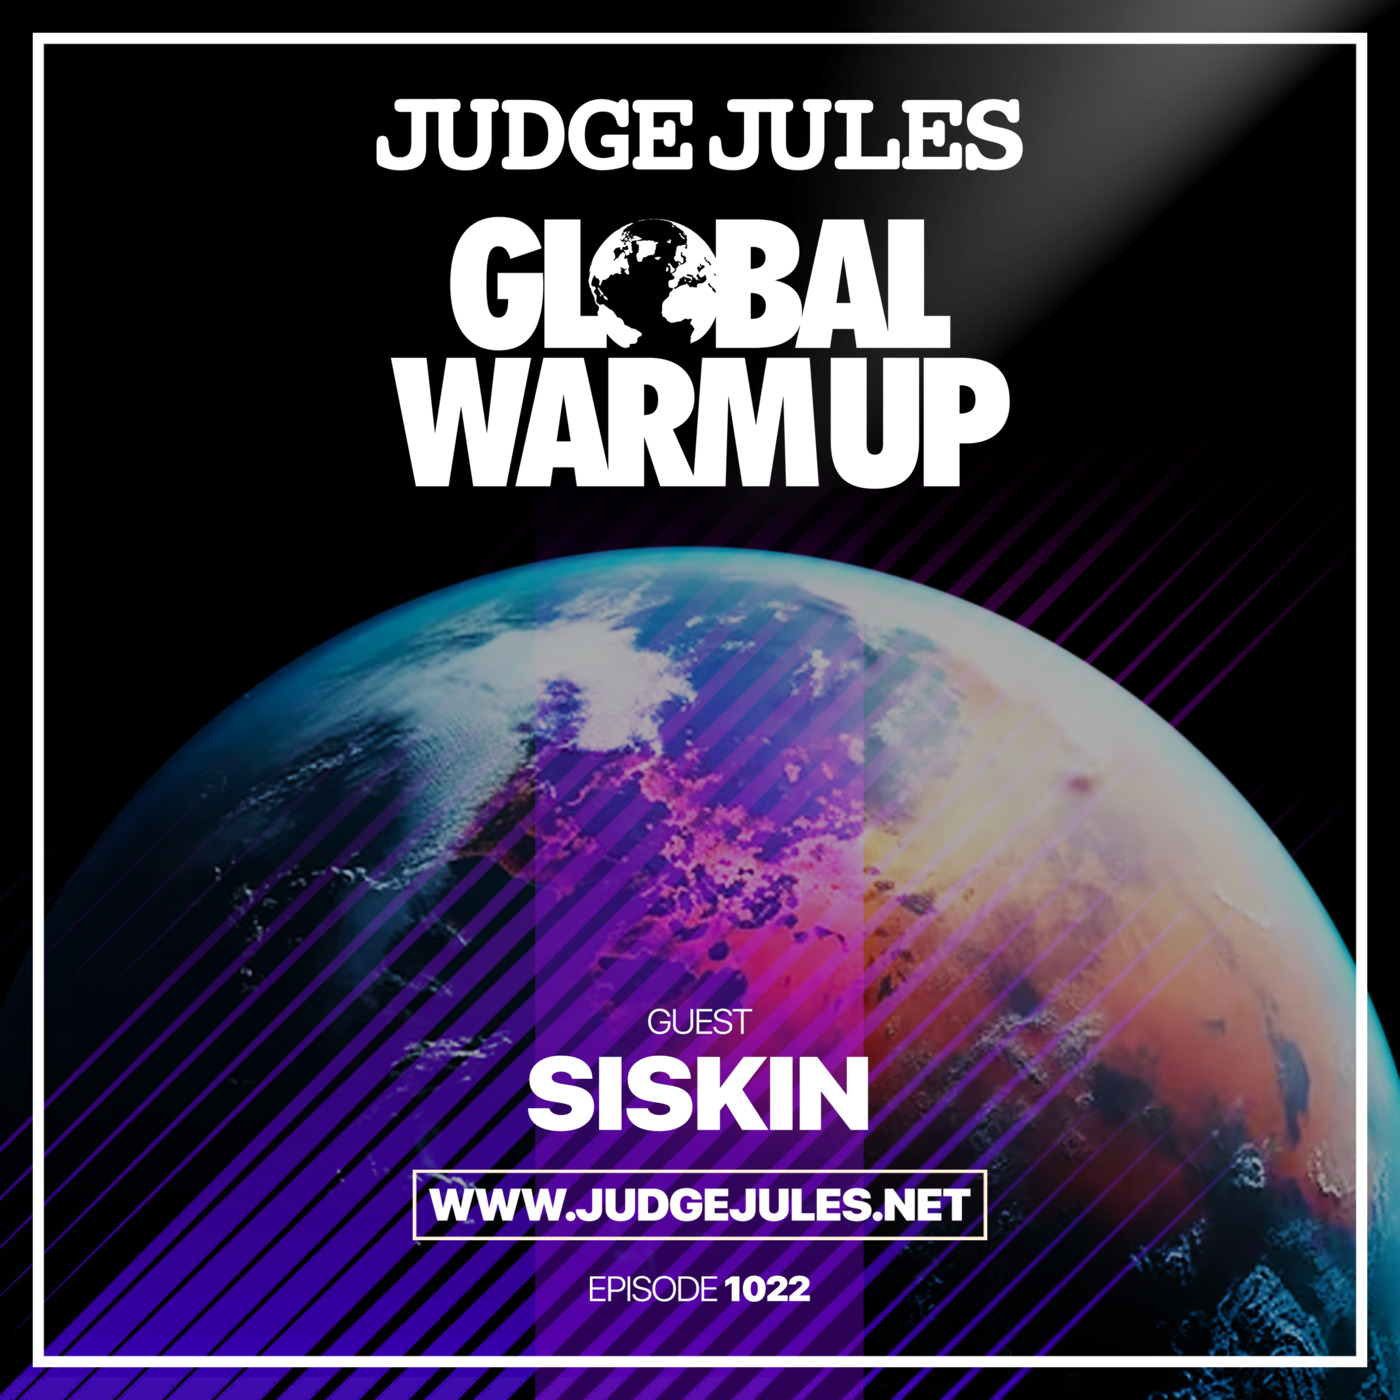 Episode 1022: JUDGE JULES PRESENTS THE GLOBAL WARM UP EPISODE 1022